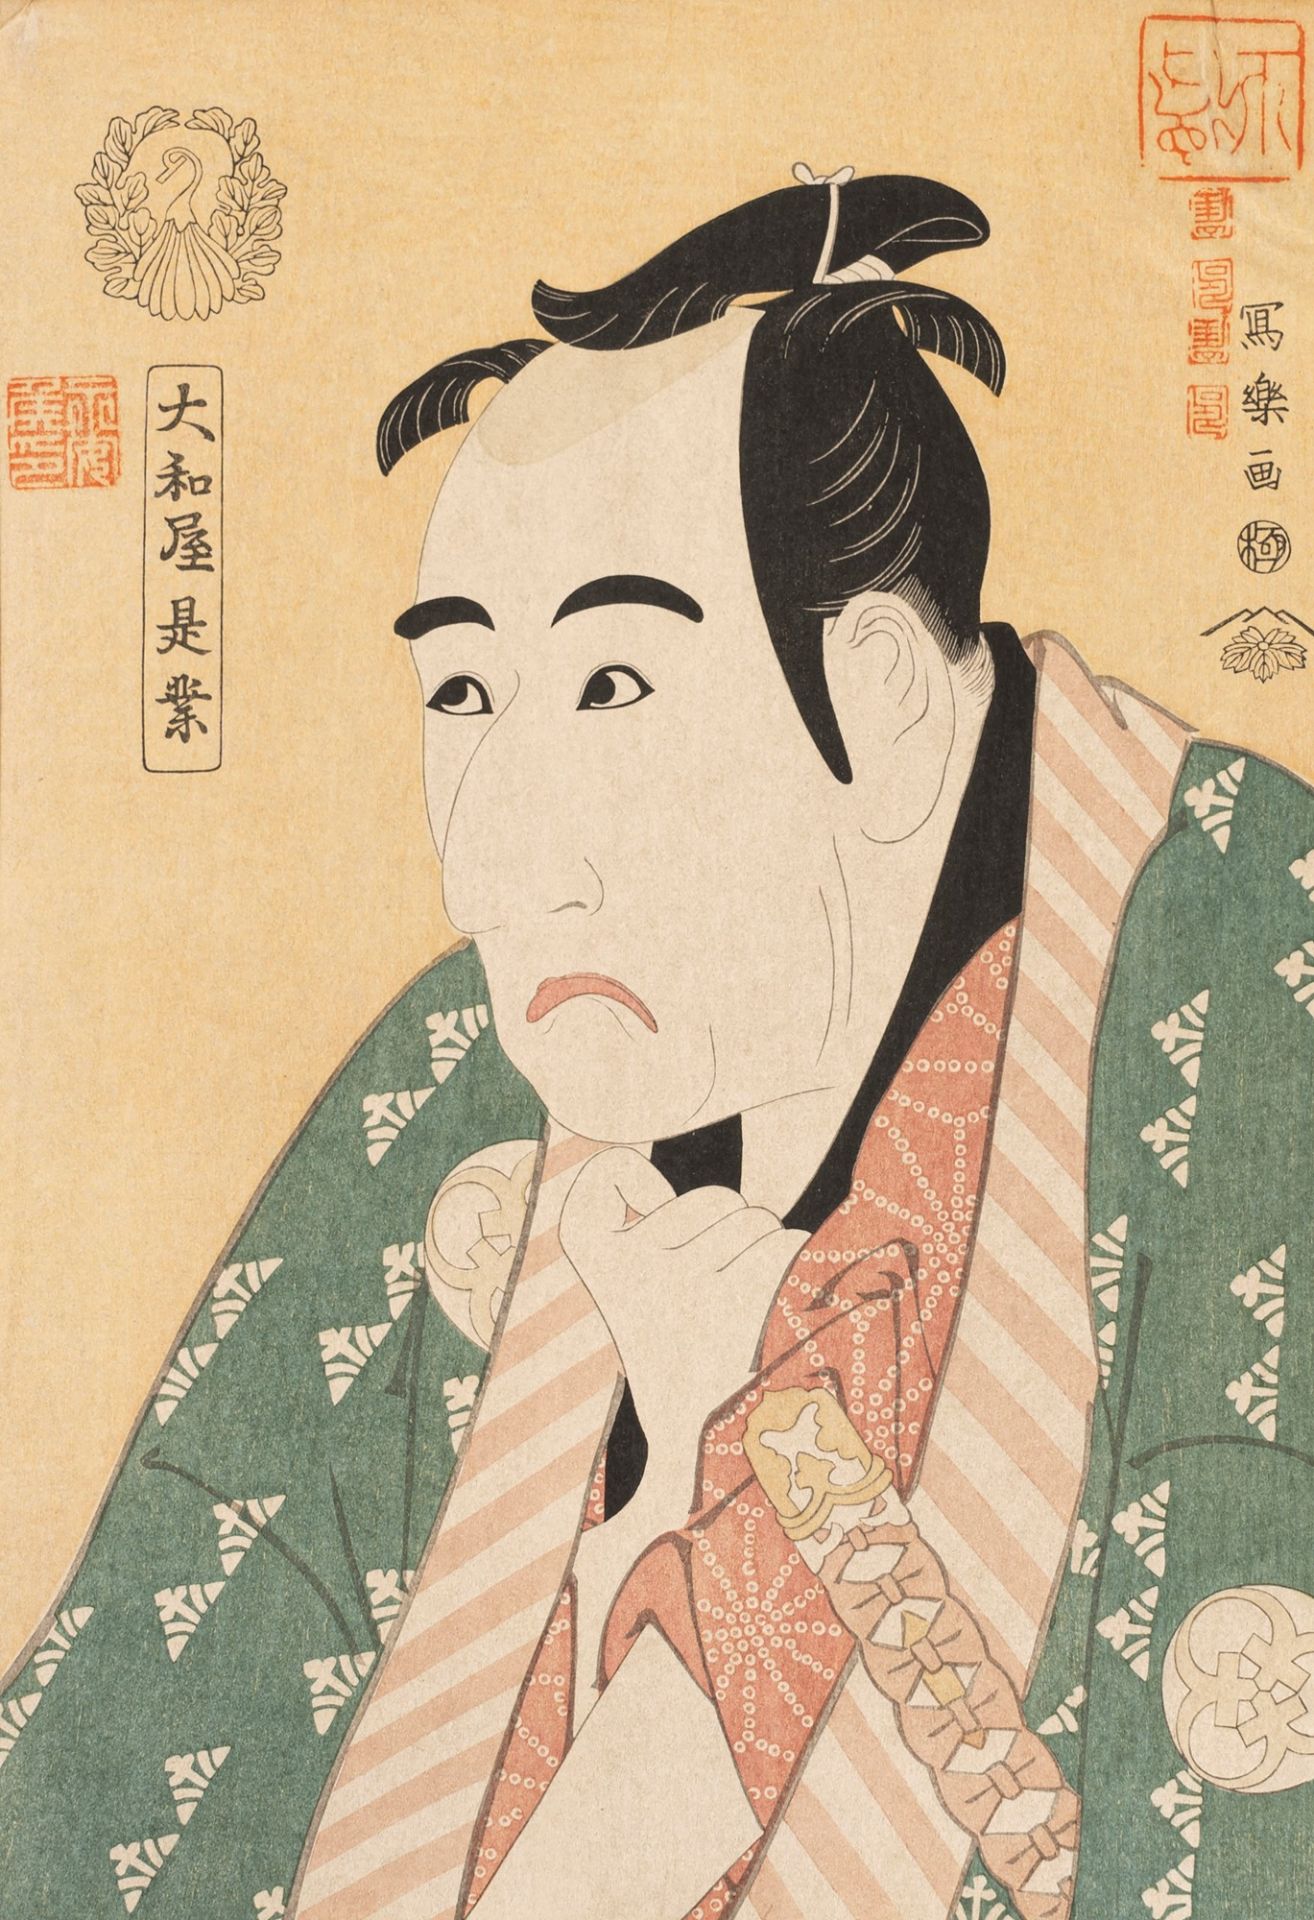 Sharaku - Six woodcuts representing theatrical masks, Japan, Taisho period